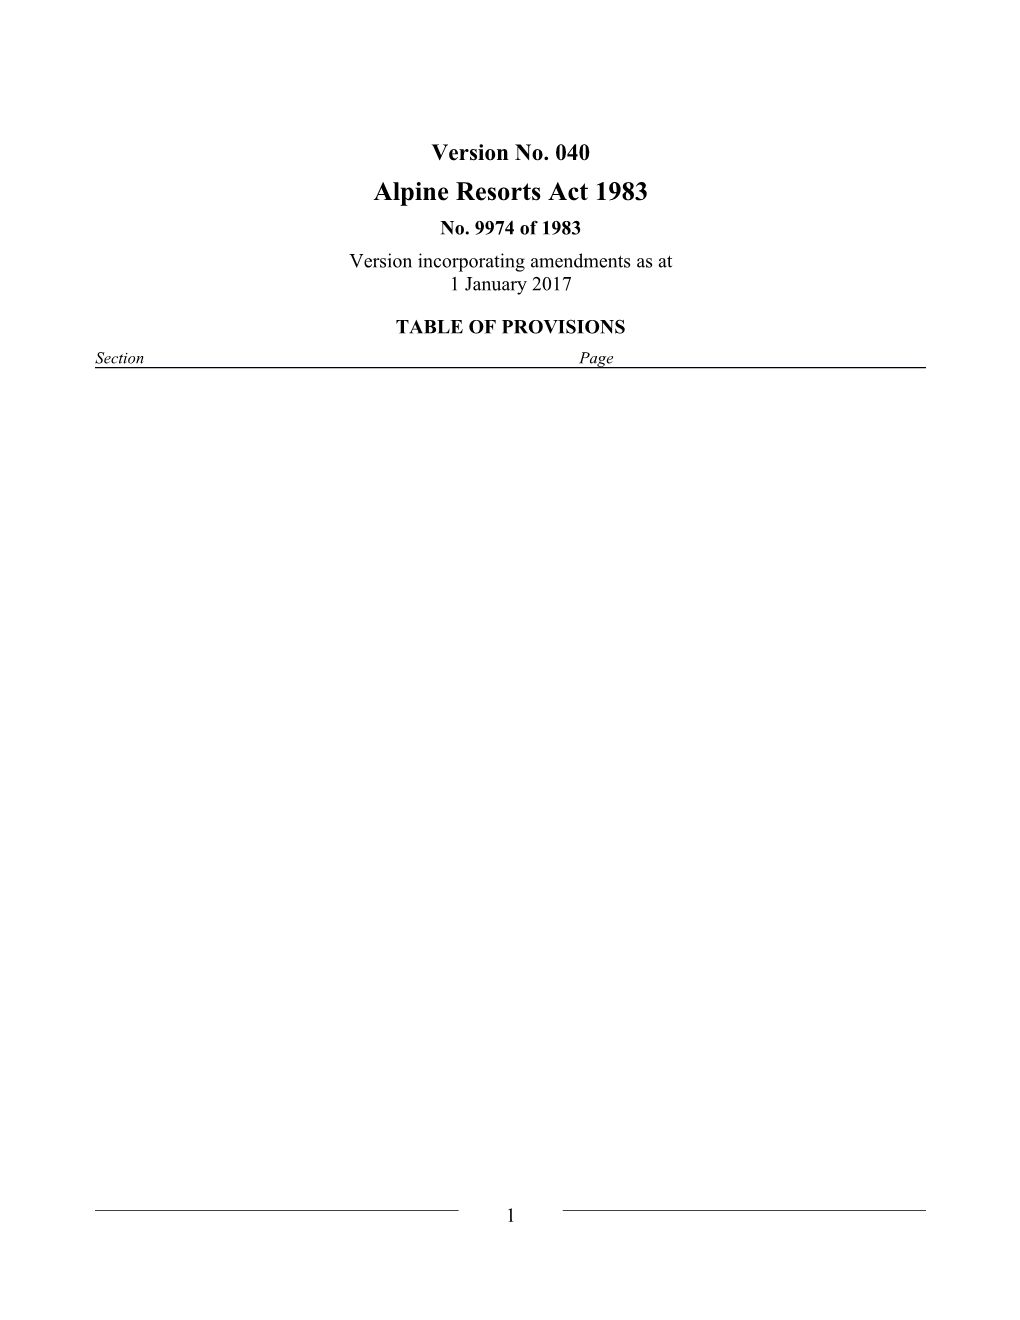 Alpine Resorts Act 1983